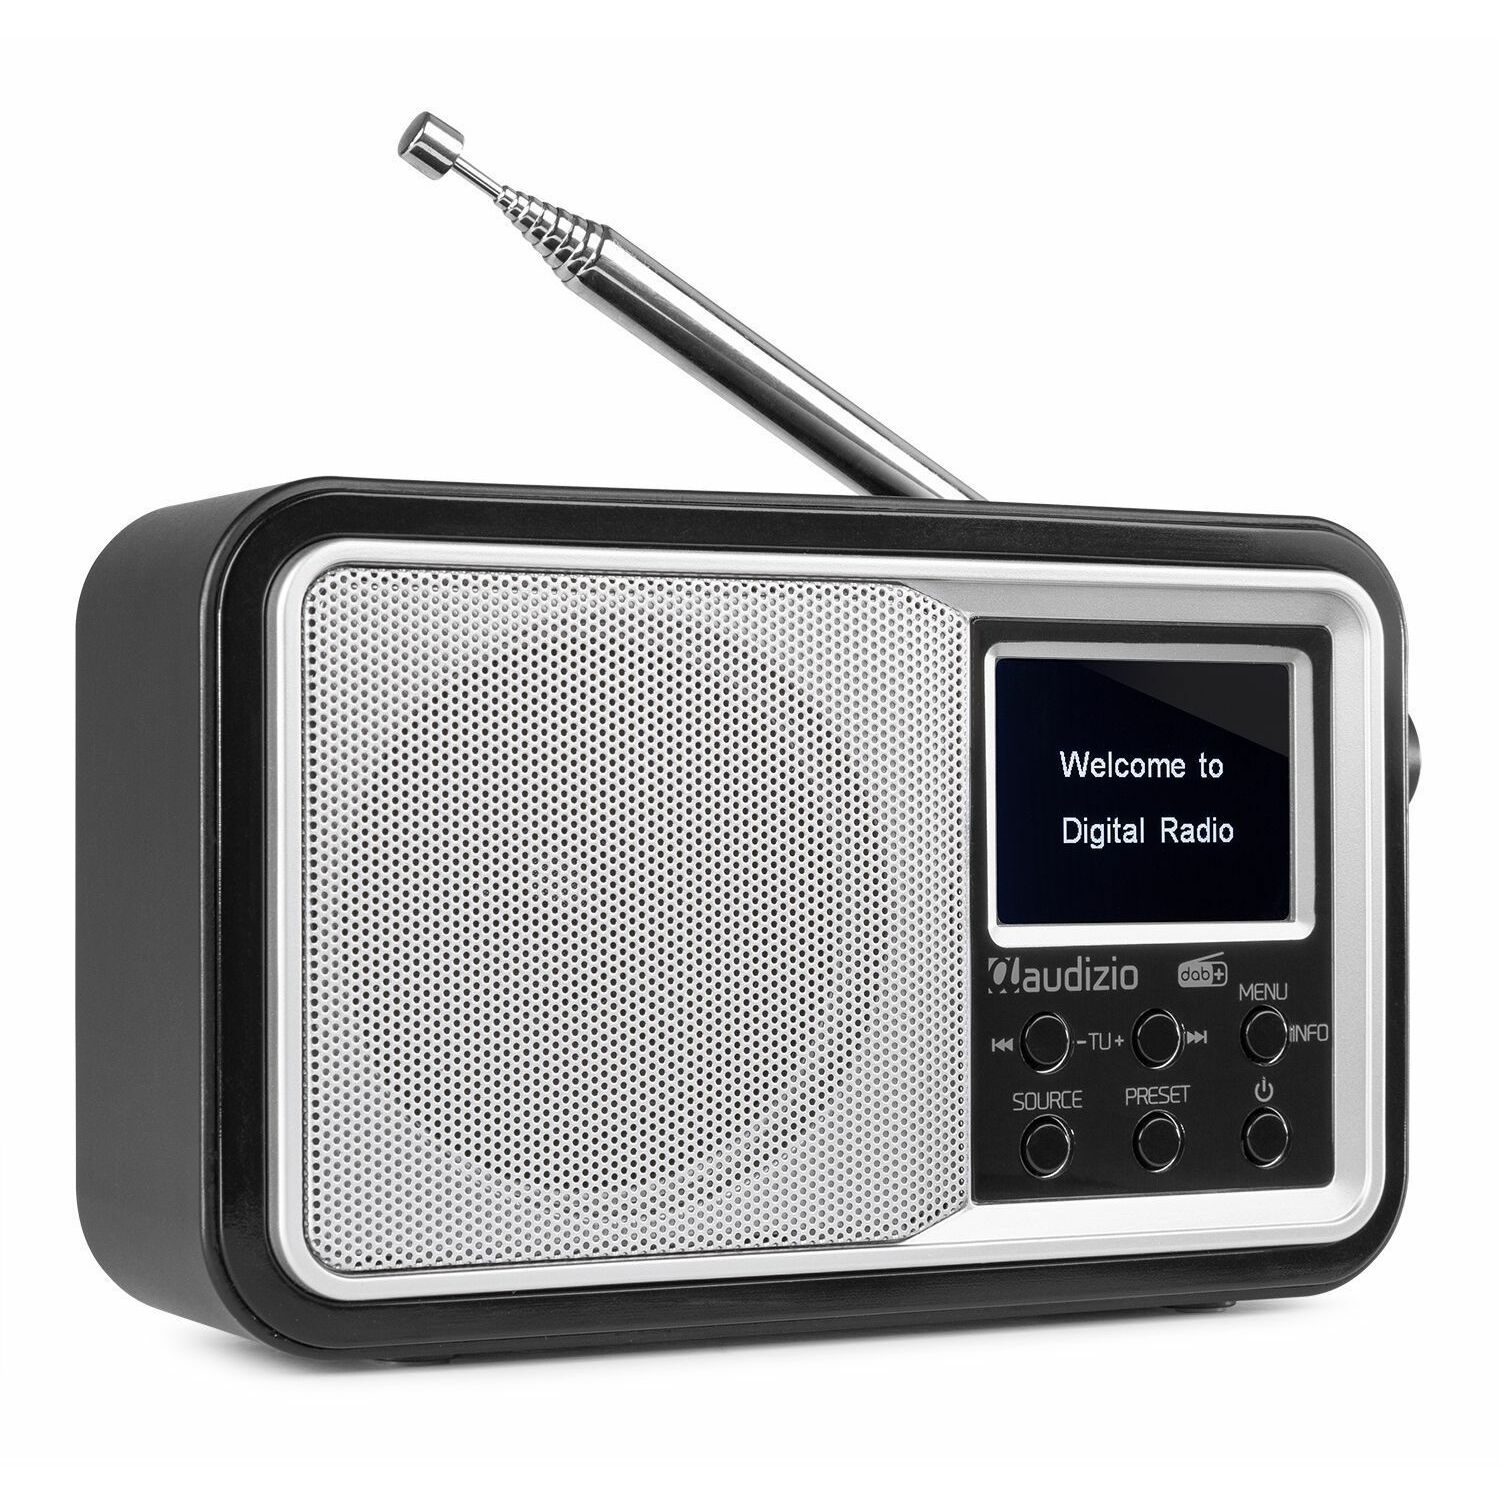 Retourdeal - Audizio Parma draagbare DAB radio met Bluetooth en FM